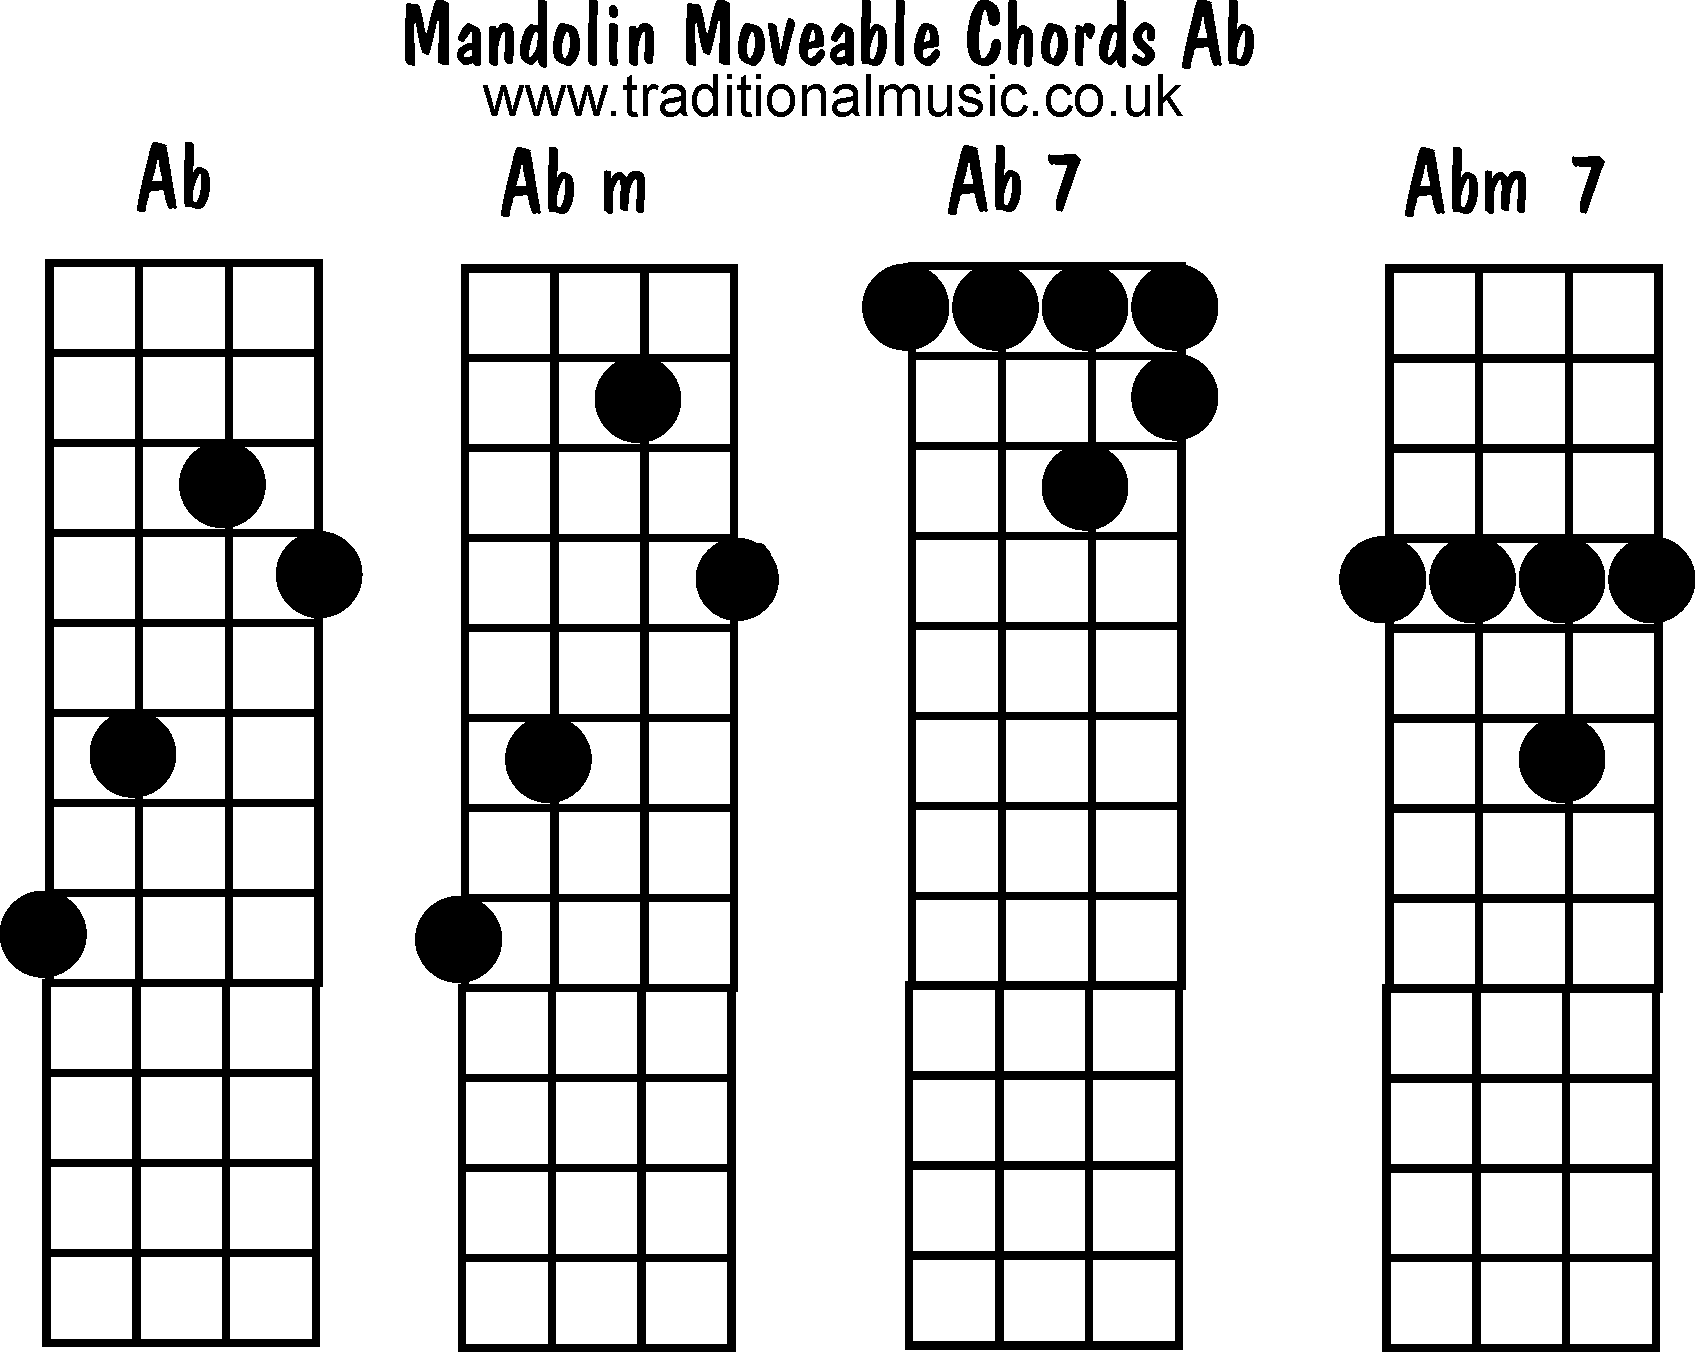 Moveable mandolin chords: Ab, Abm, Ab7, Abm7